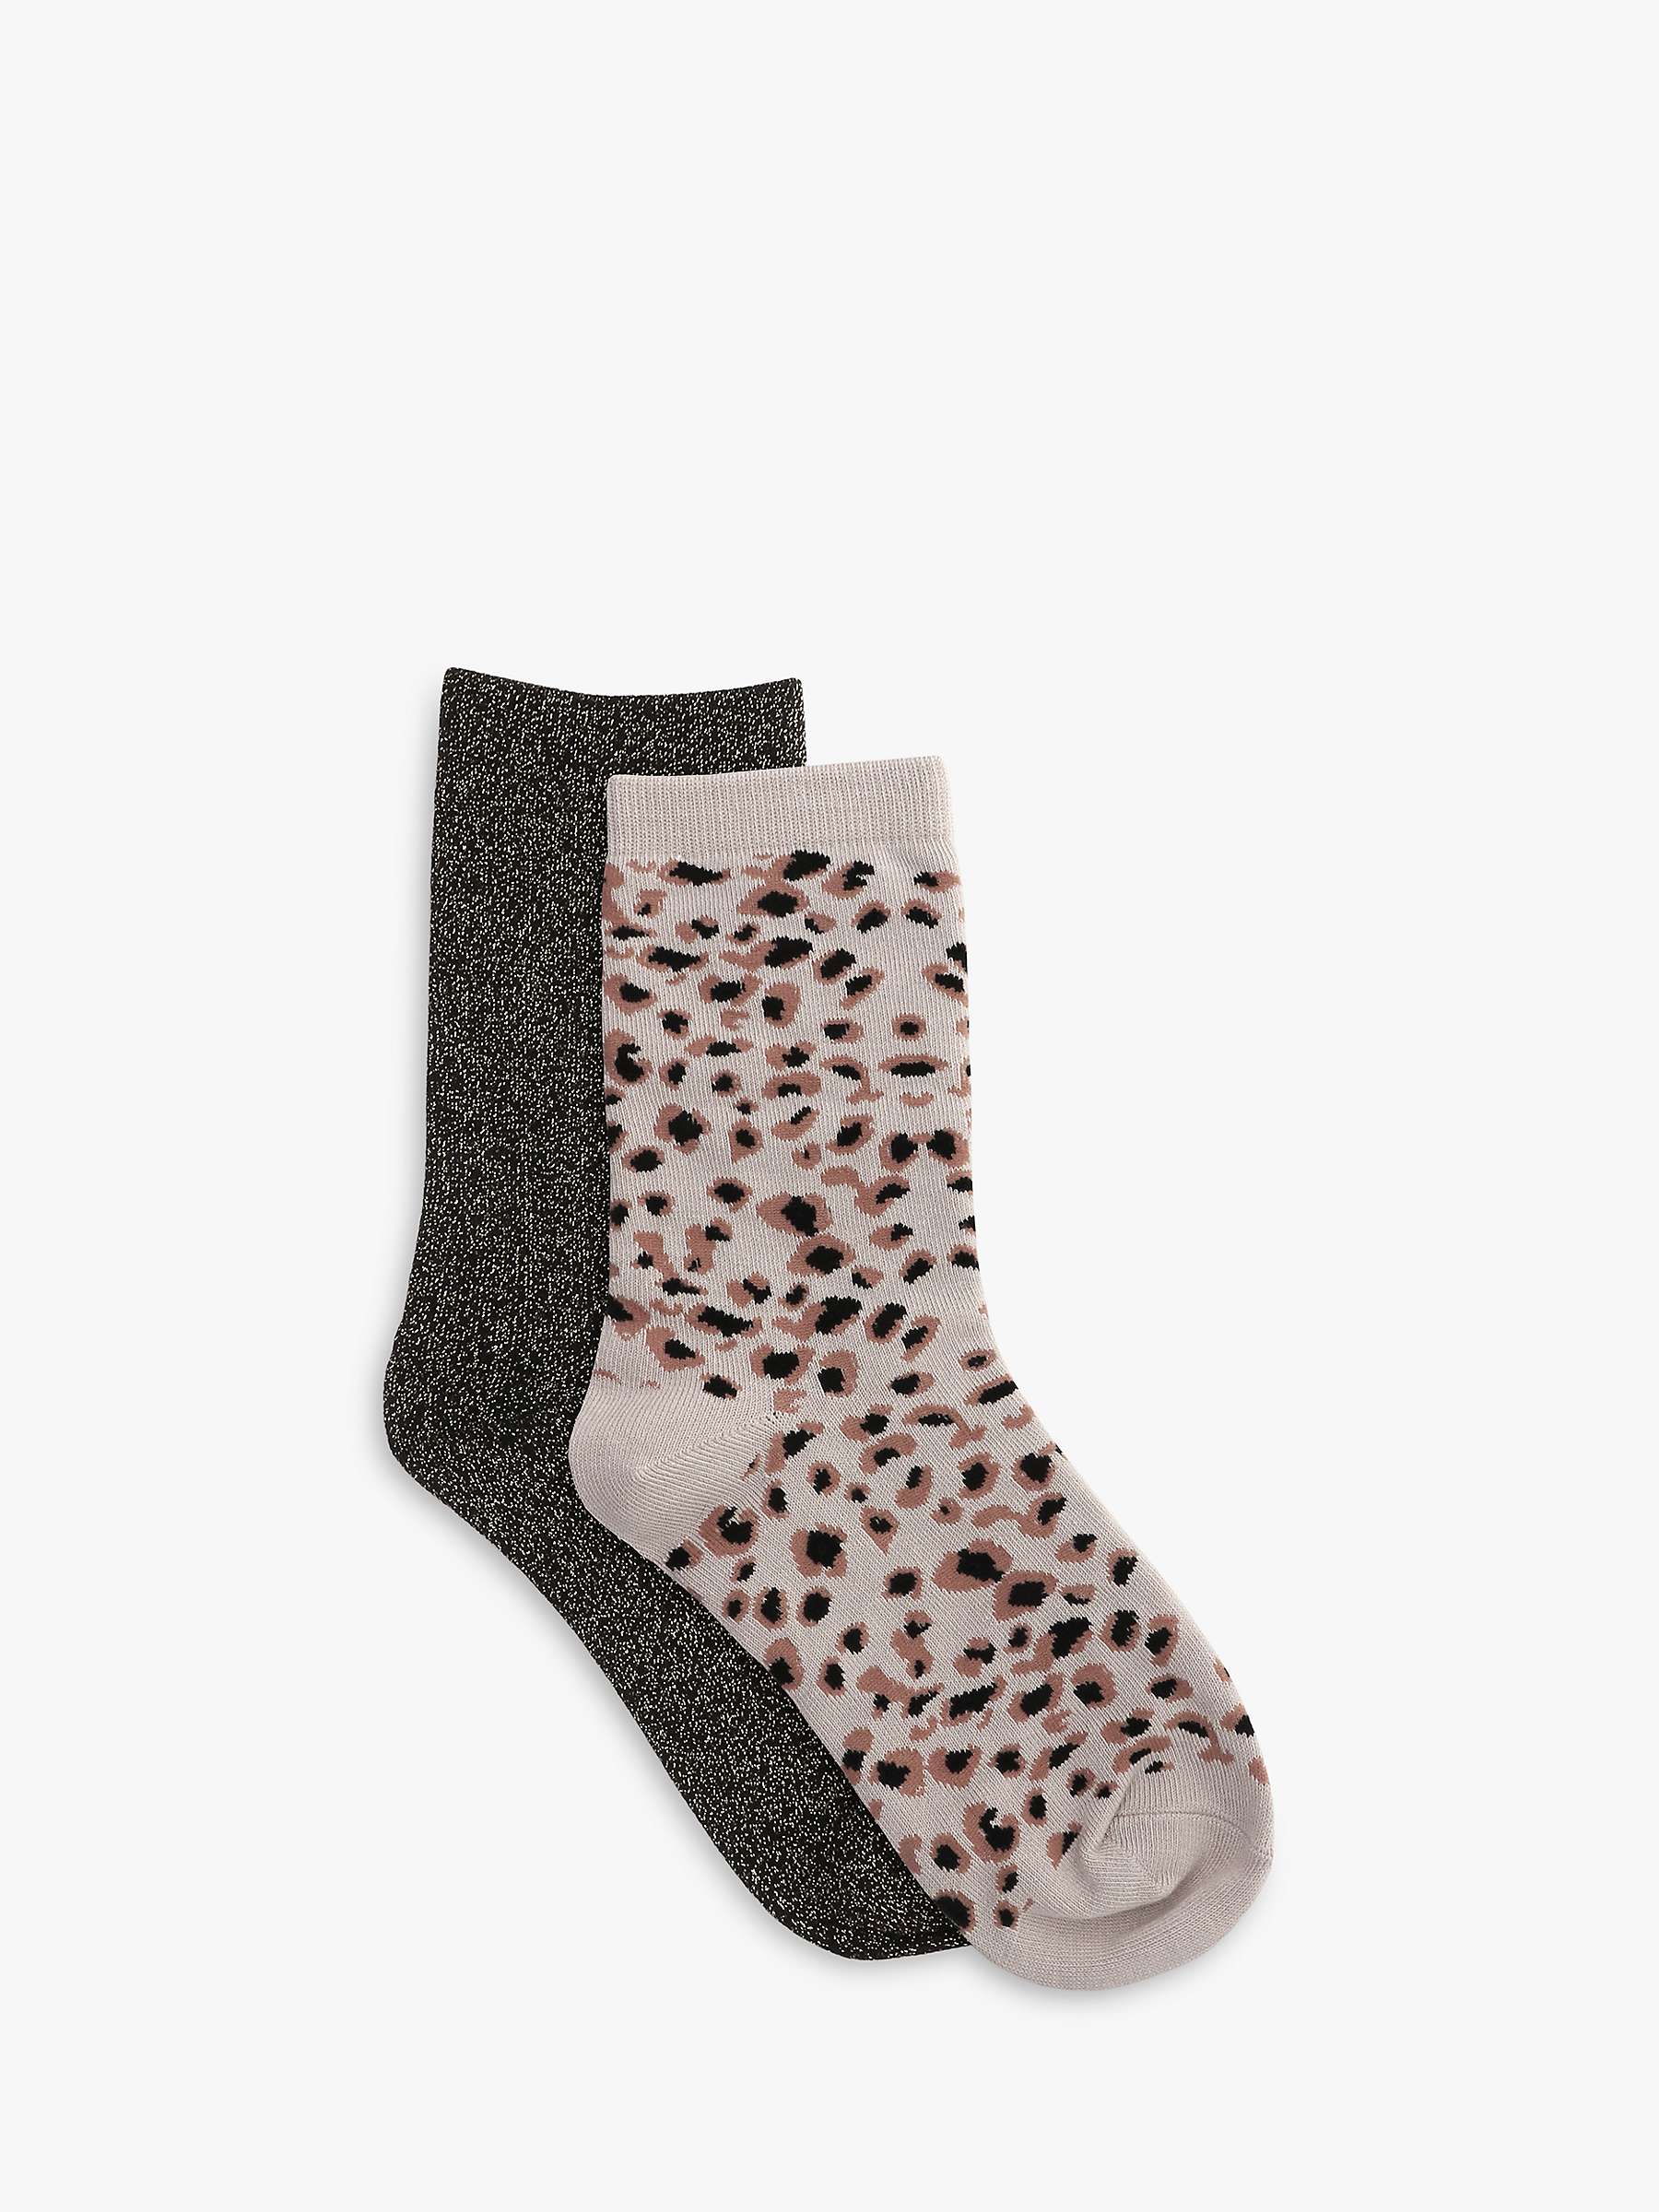 Buy Tutti & Co Jasper Bamboo Cotton Blend Socks, Pack of 2, Neutral Mix Online at johnlewis.com